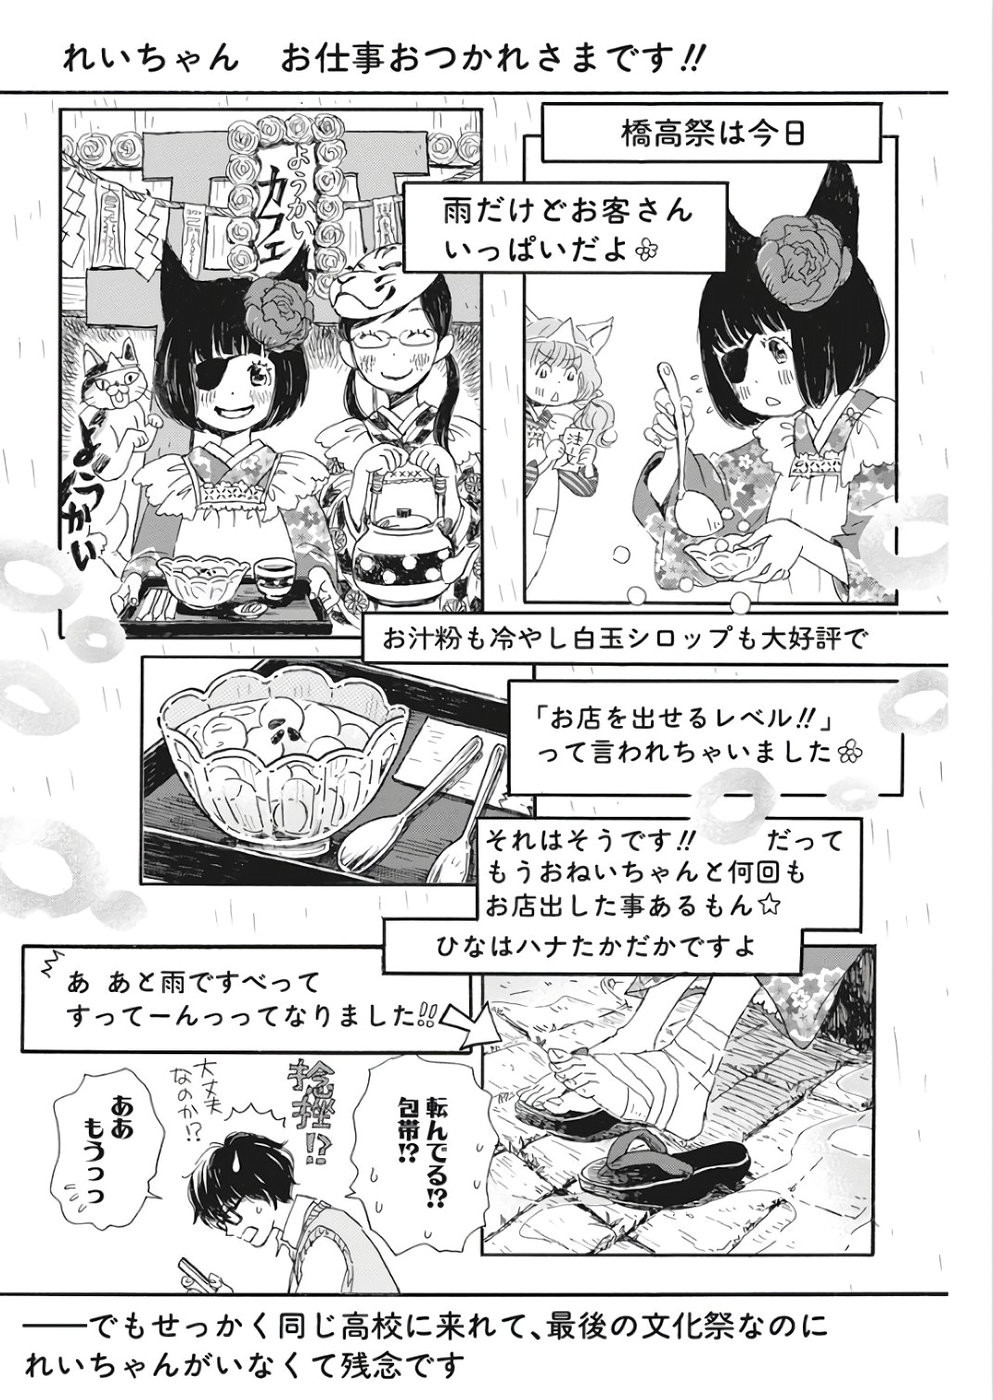 3 Gatsu no Lion - Chapter 151 - Page 10